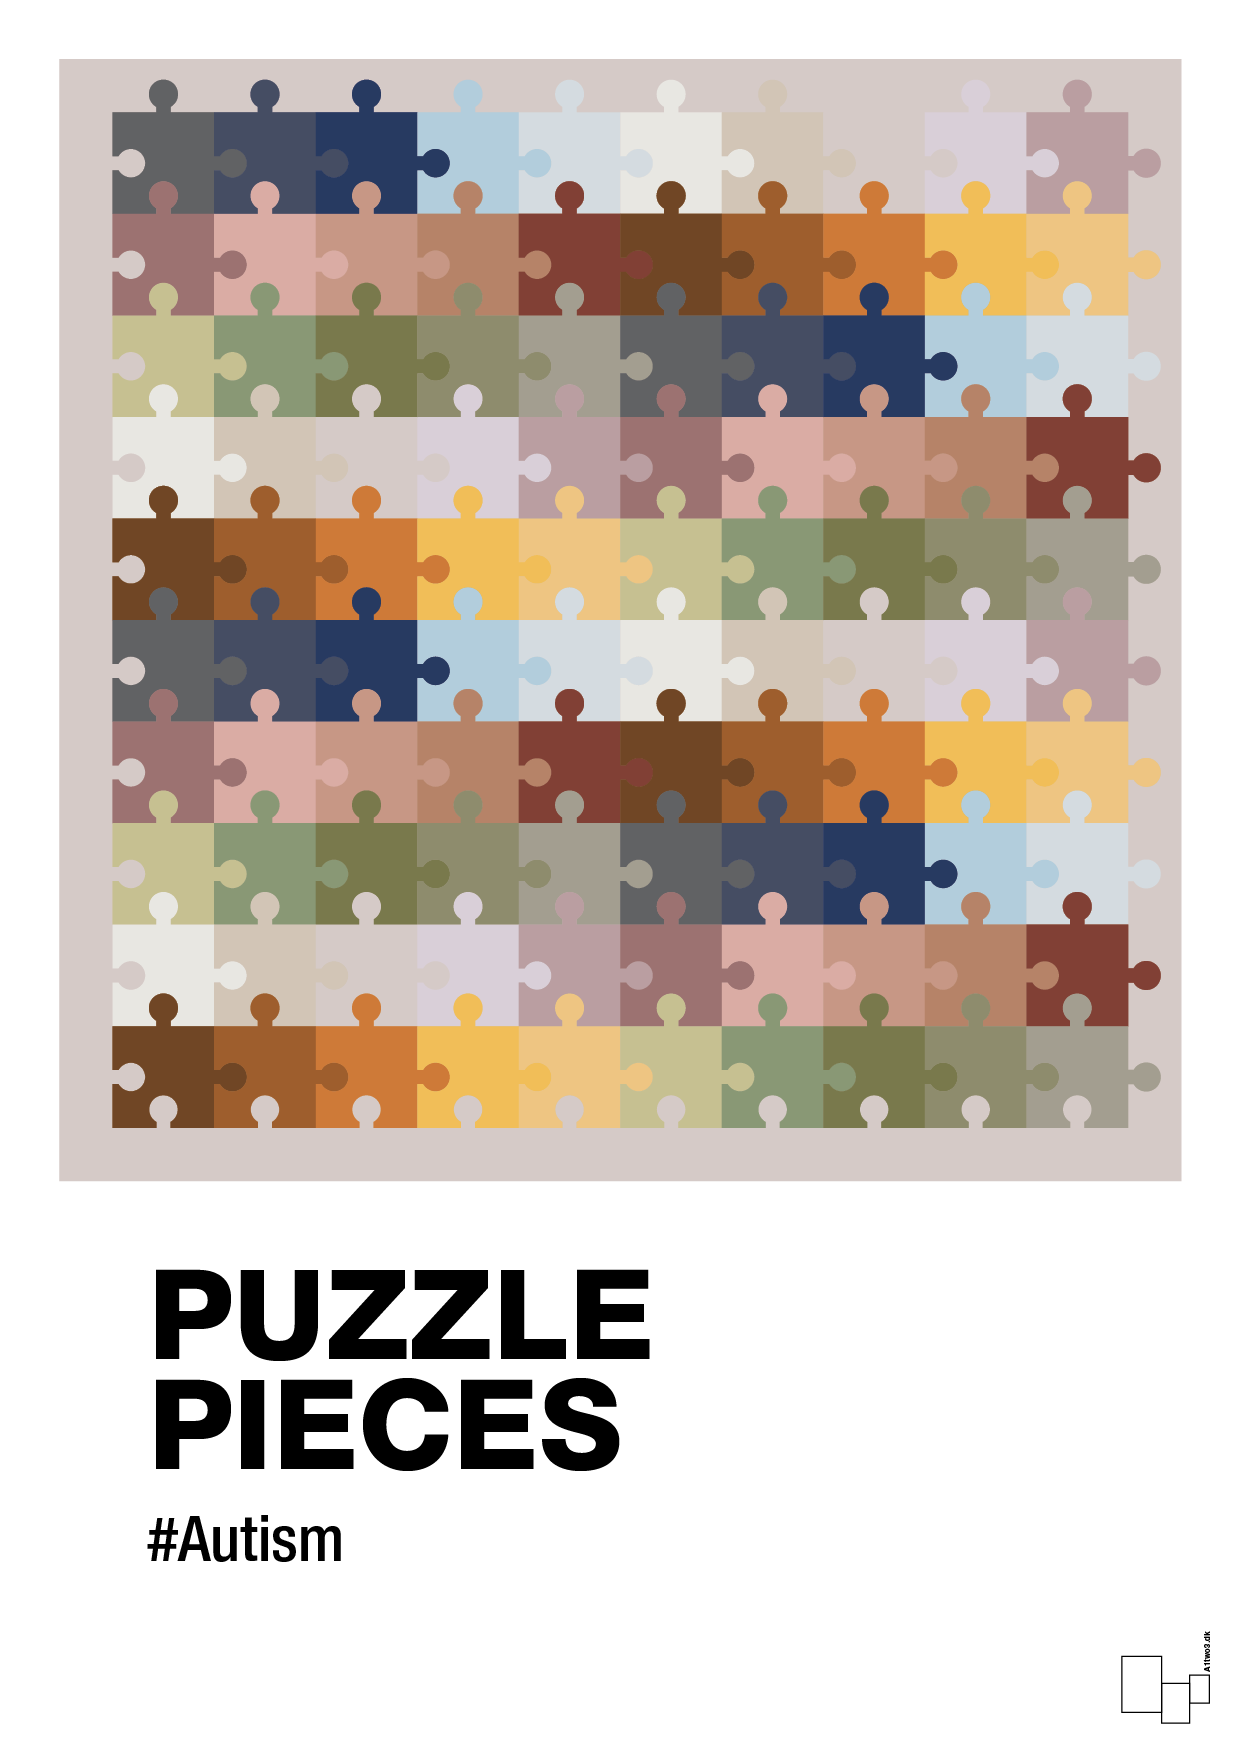 puzzle pieces - Plakat med Samfund i Broken Beige